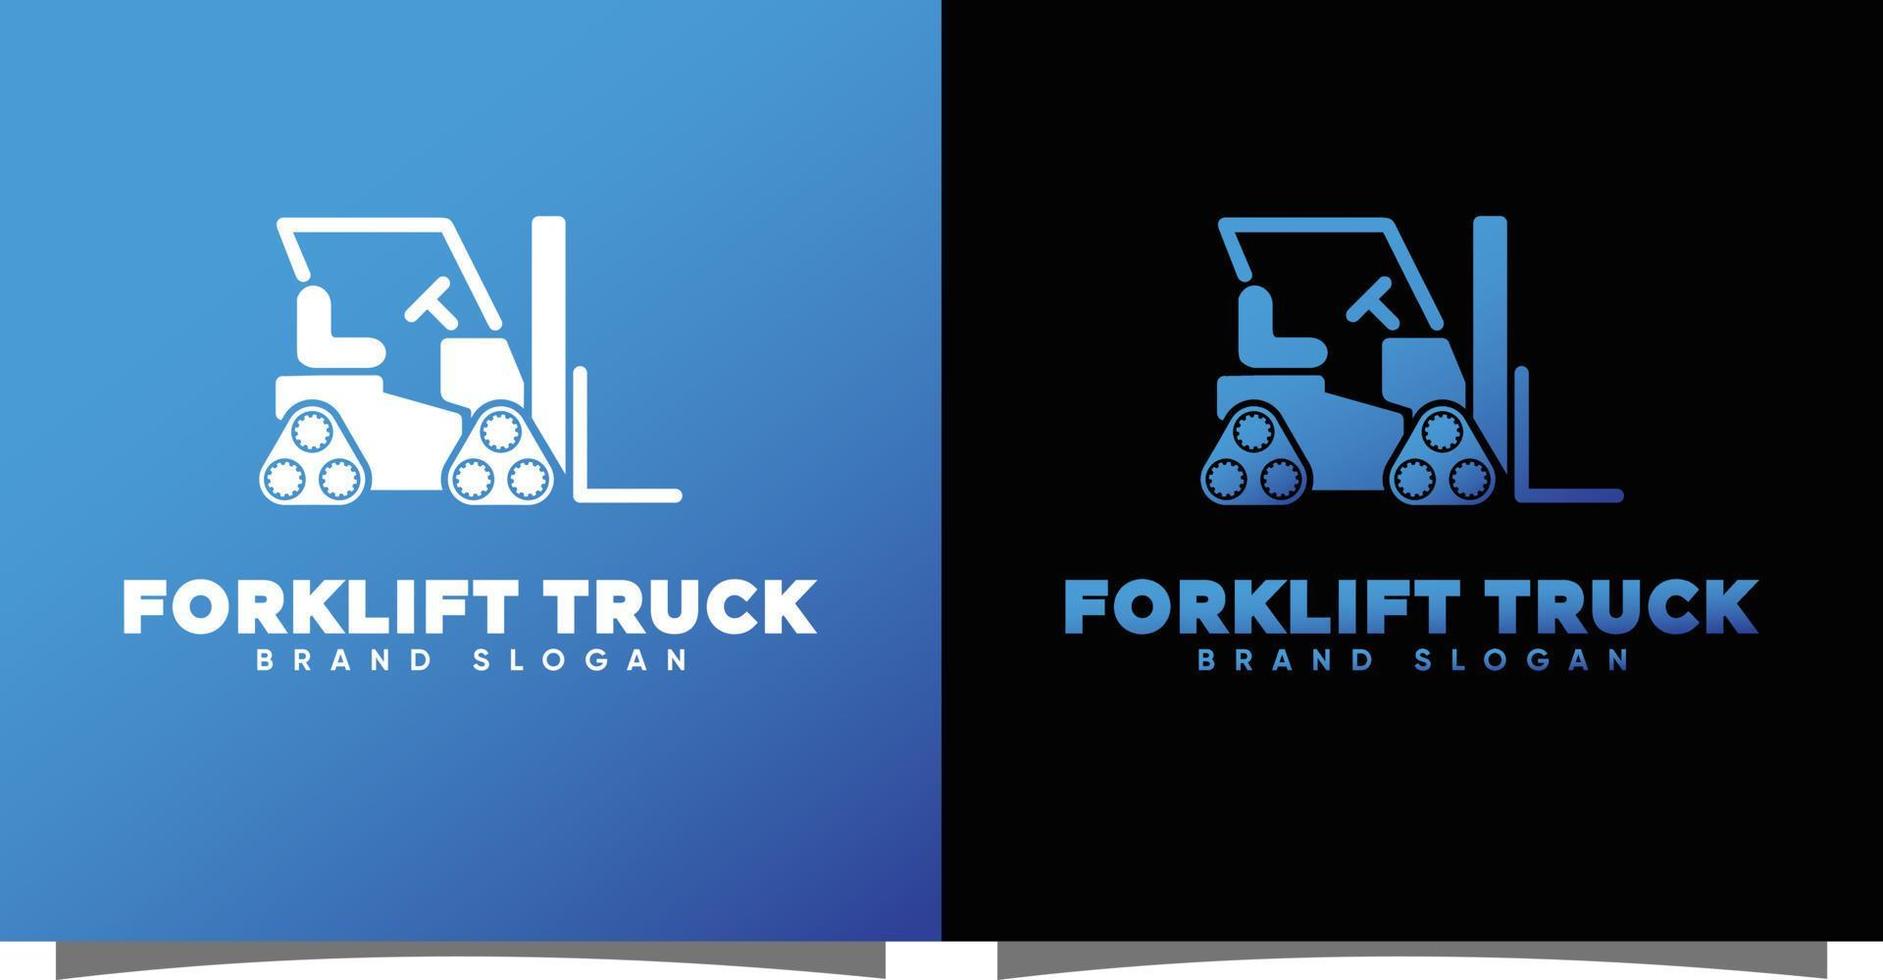 Forklift logo with creative modern syle Premium Vector